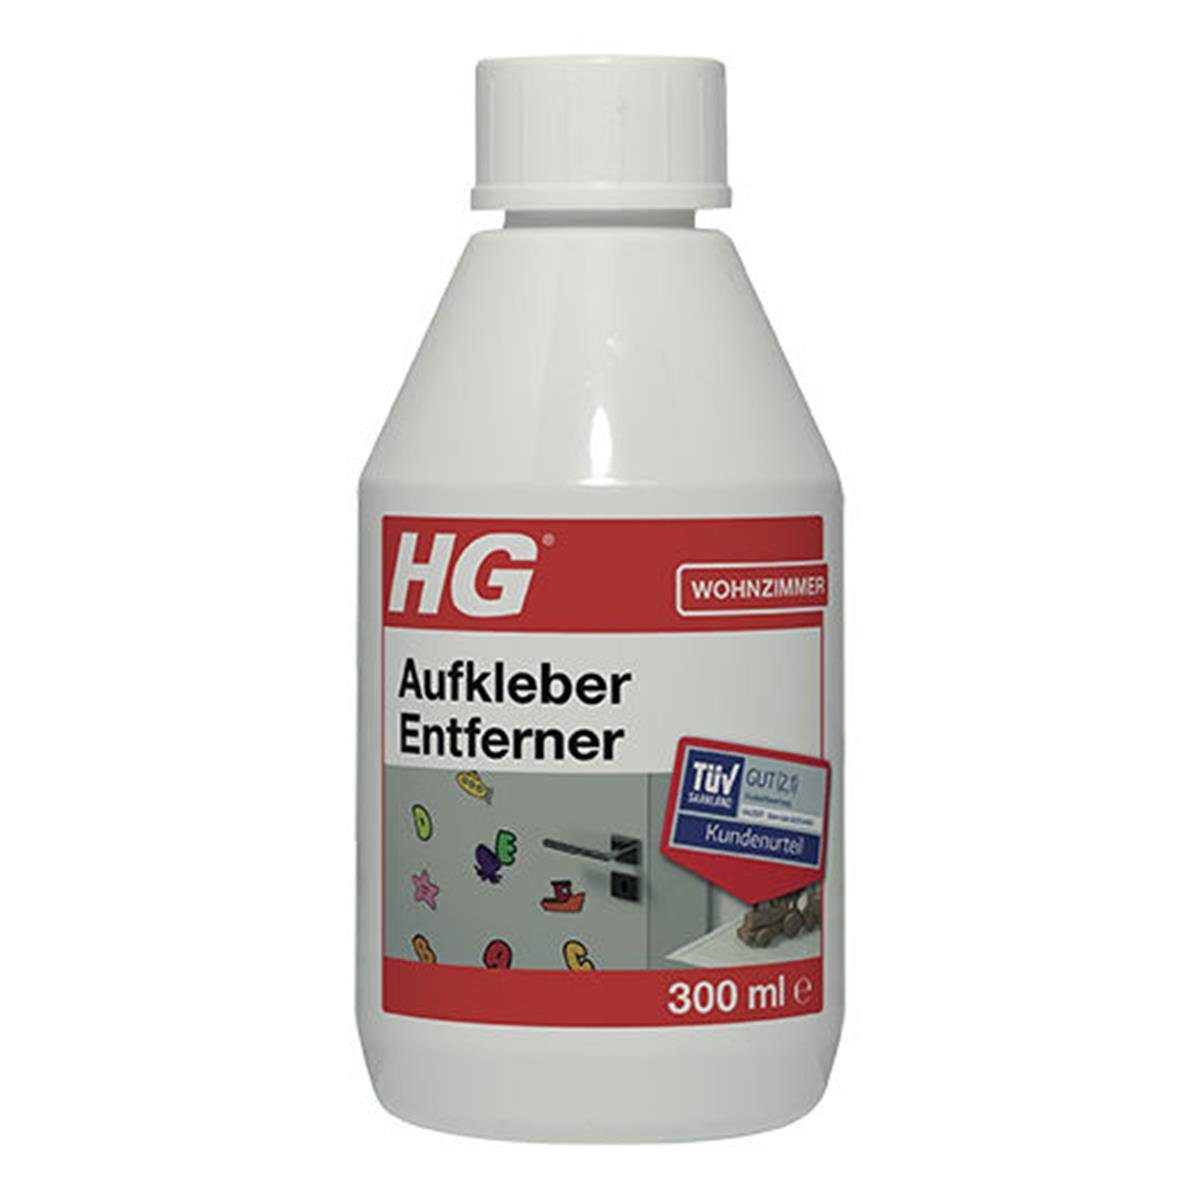 HG HG Aufkleber 300ml (1er Spezialwaschmittel Pack) Entferner